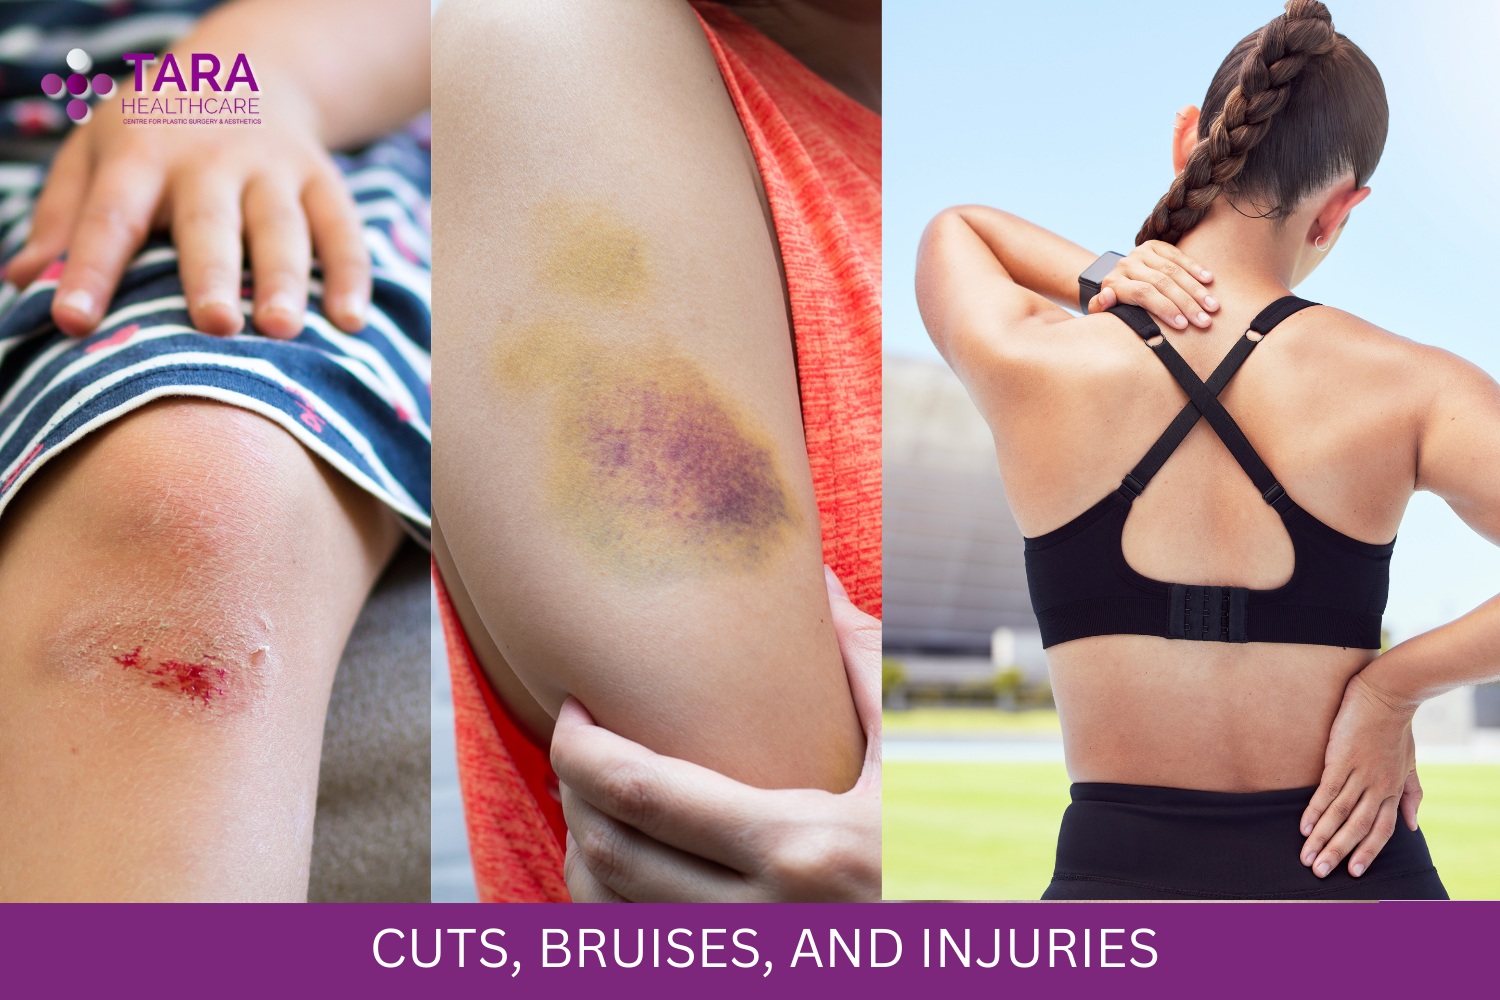 Treatment for Cuts, Bruises & Injuries? - Tara Healthcare